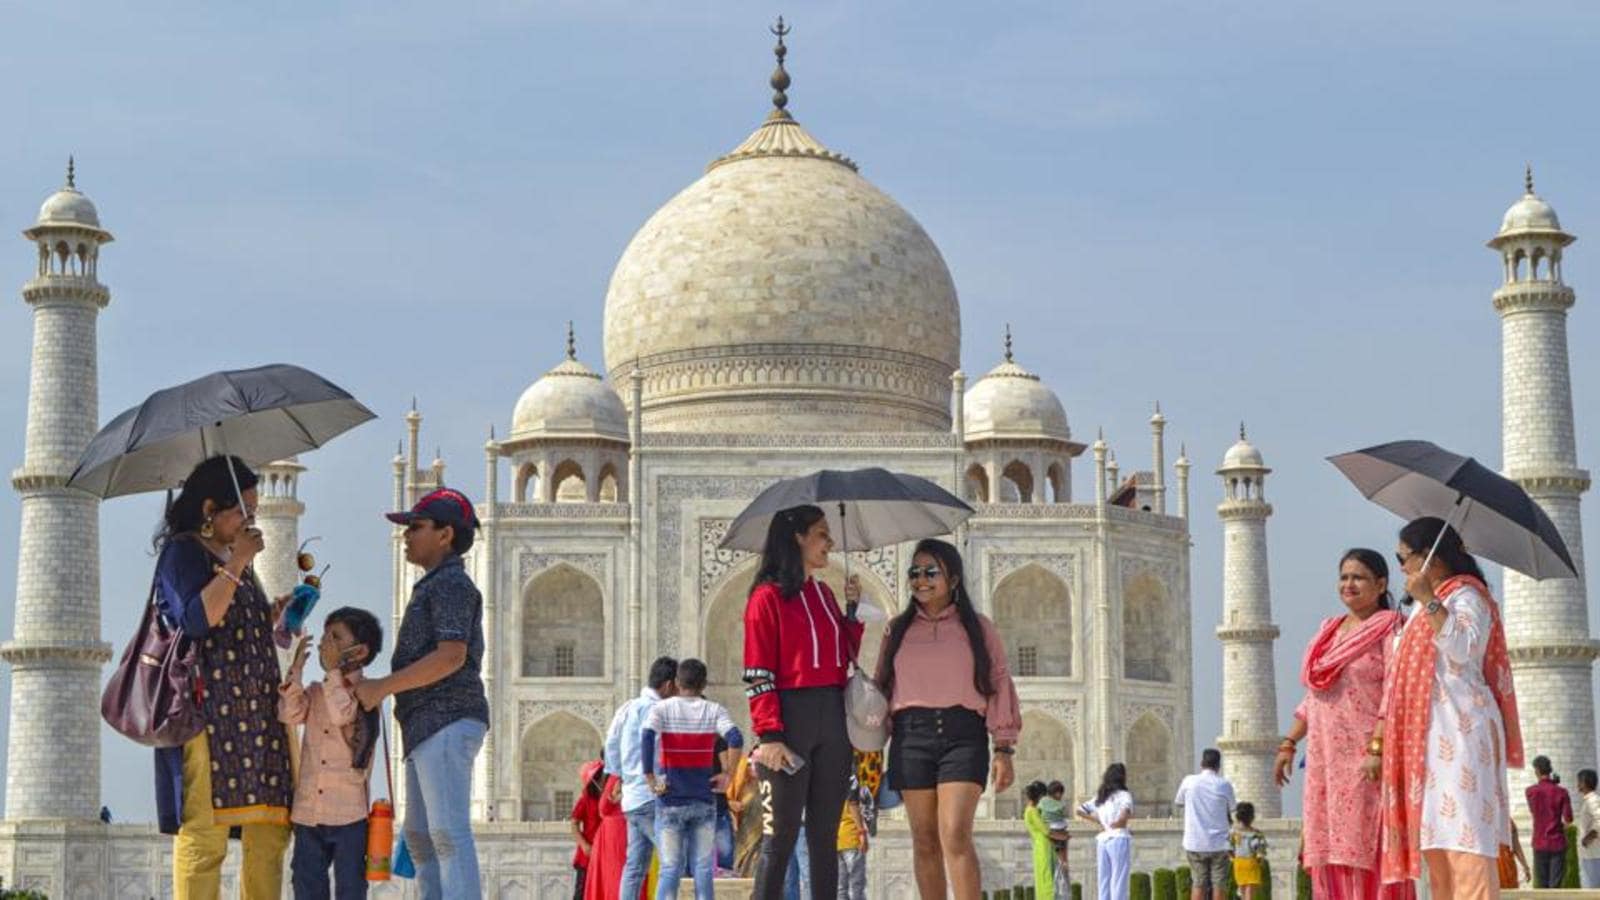 domestic tourism in india 2021